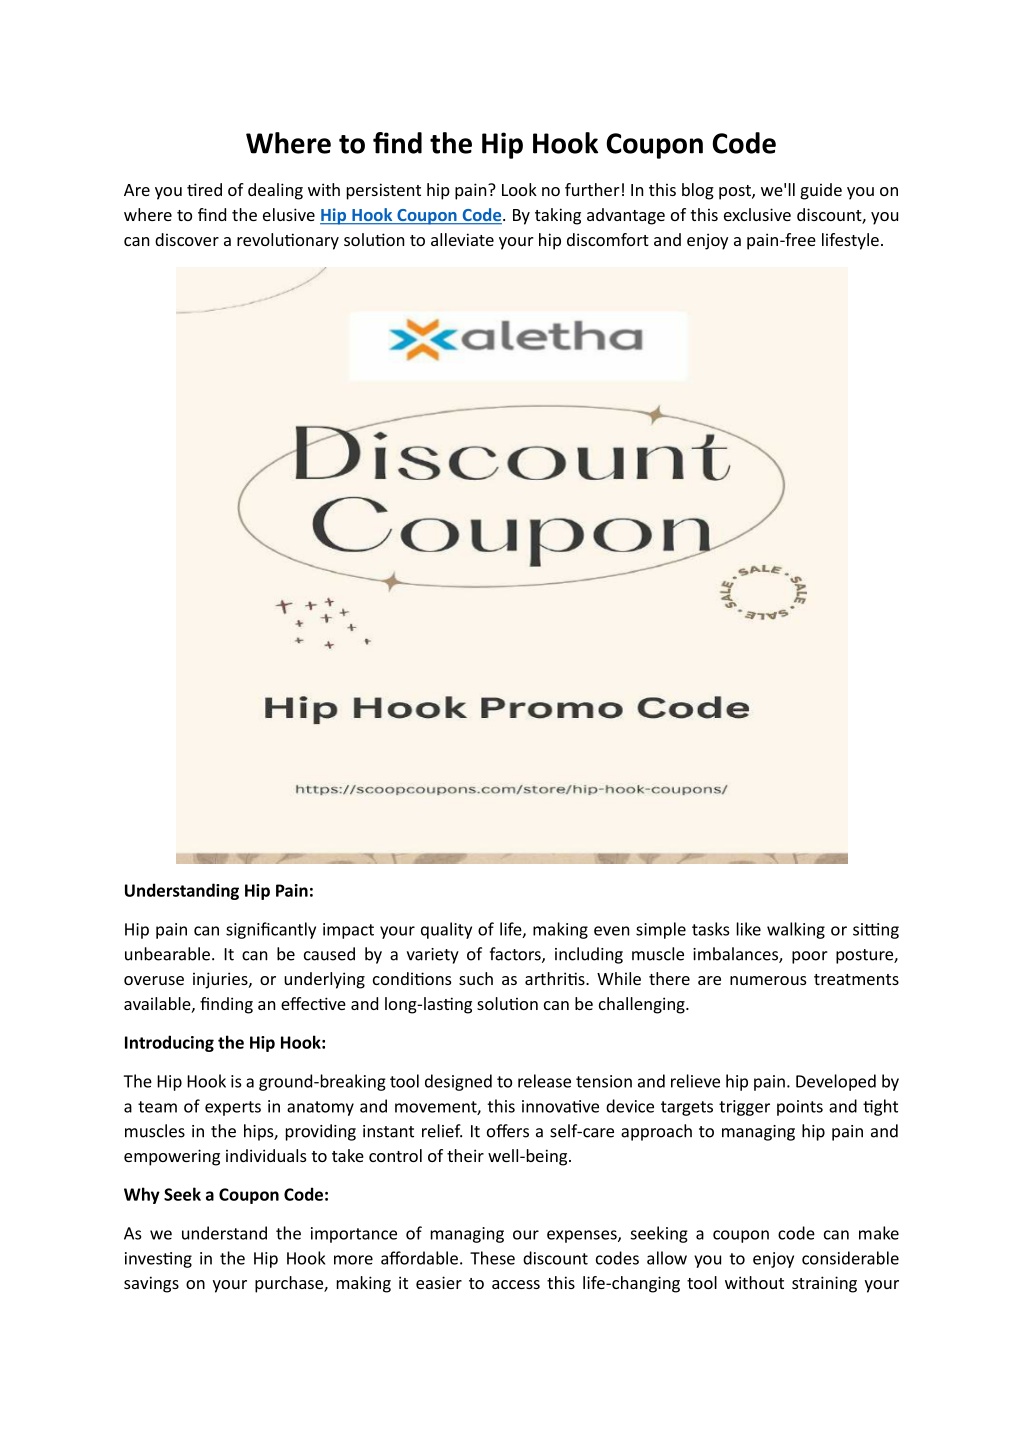 https://image7.slideserve.com/12190333/where-to-find-the-hip-hook-coupon-code-l.jpg